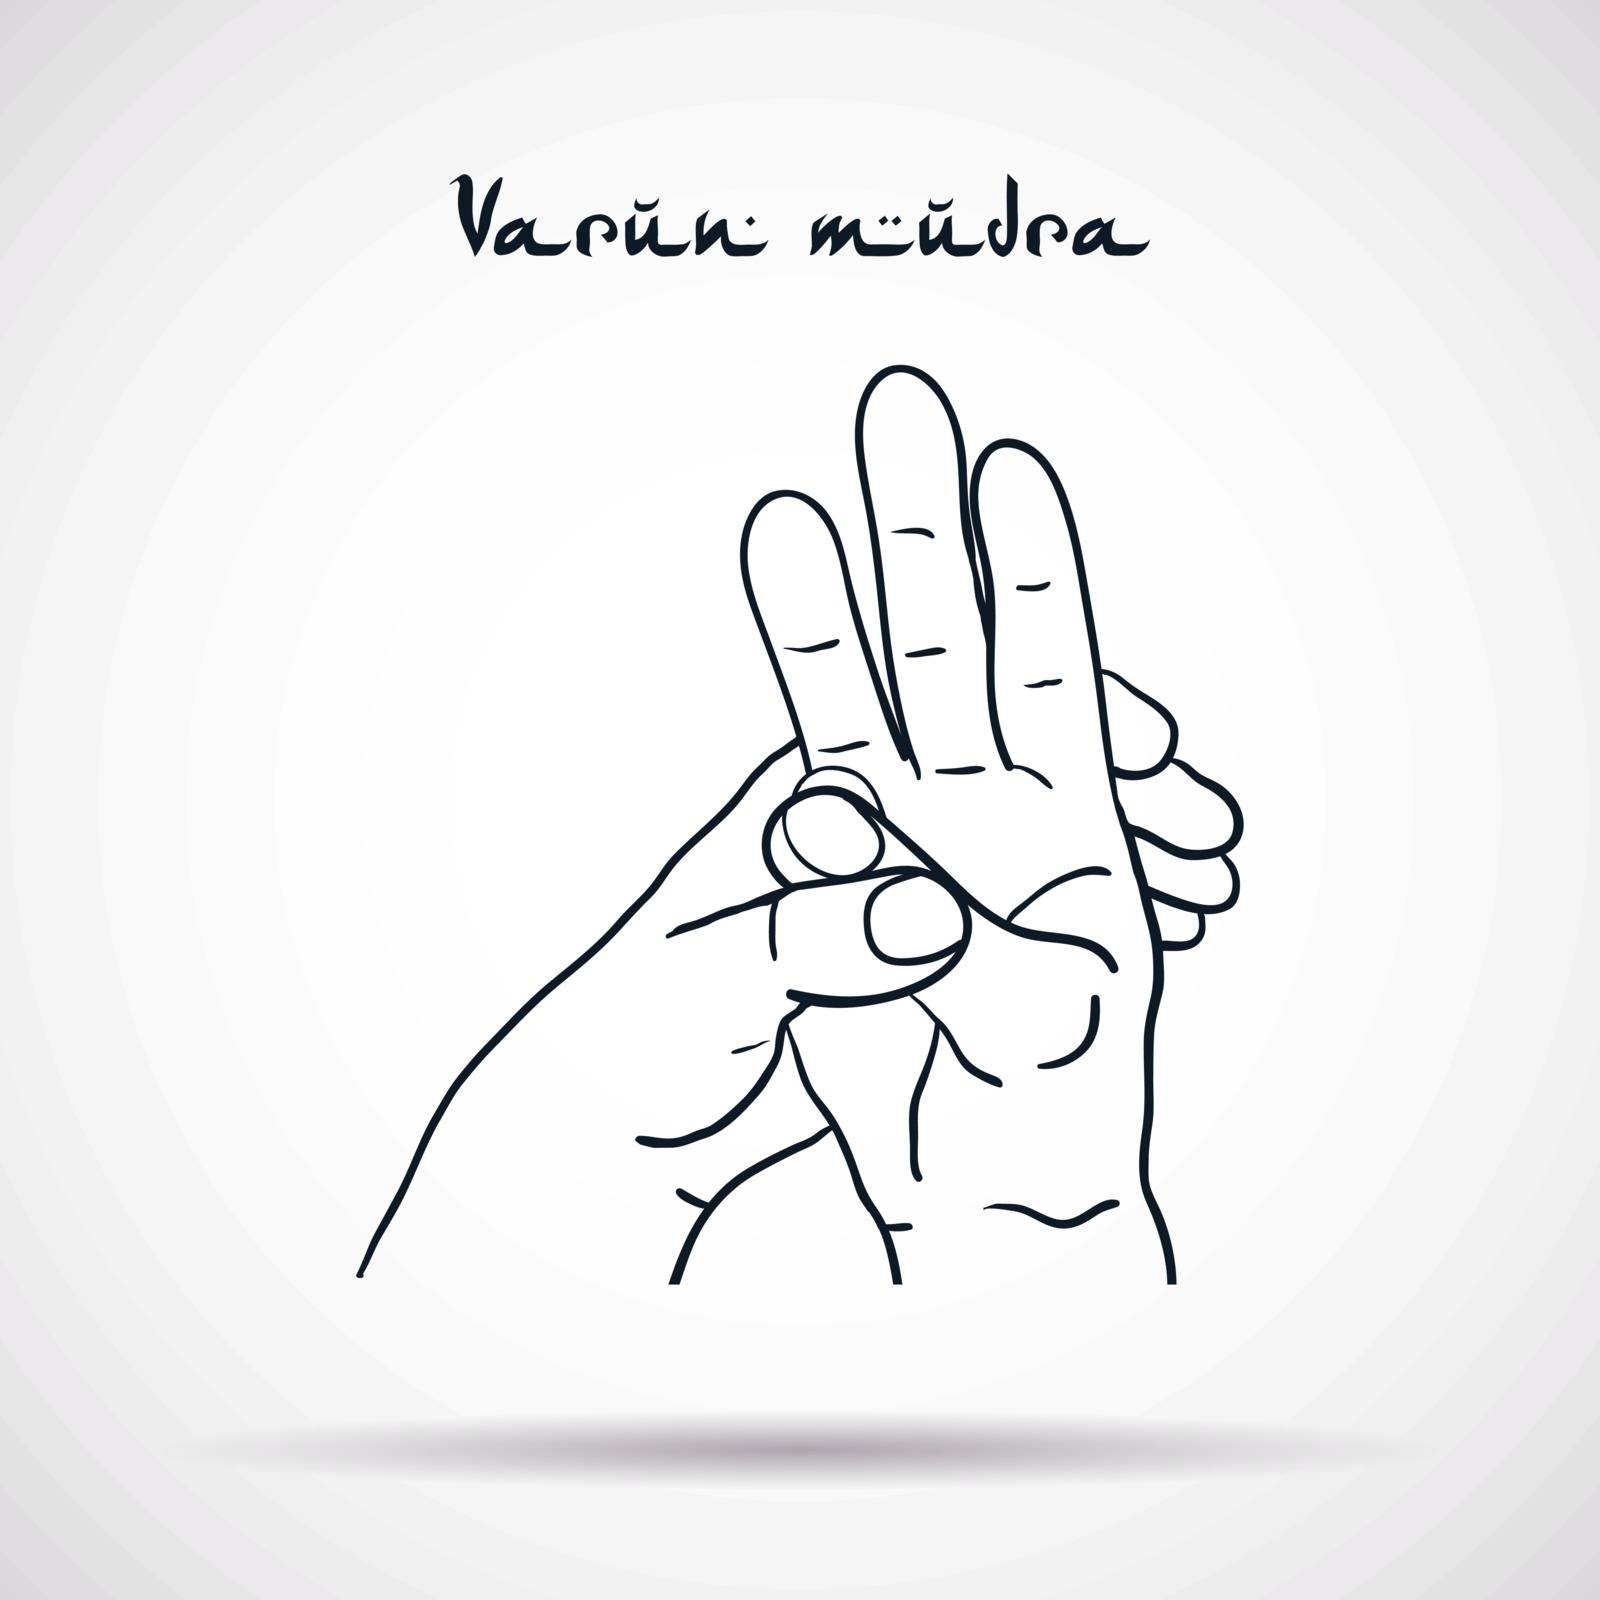 Element yoga Varun mudra hands with mehendi patterns. Vector illustration for a yoga studio, tattoo, spa, postcards, souvenirs. 